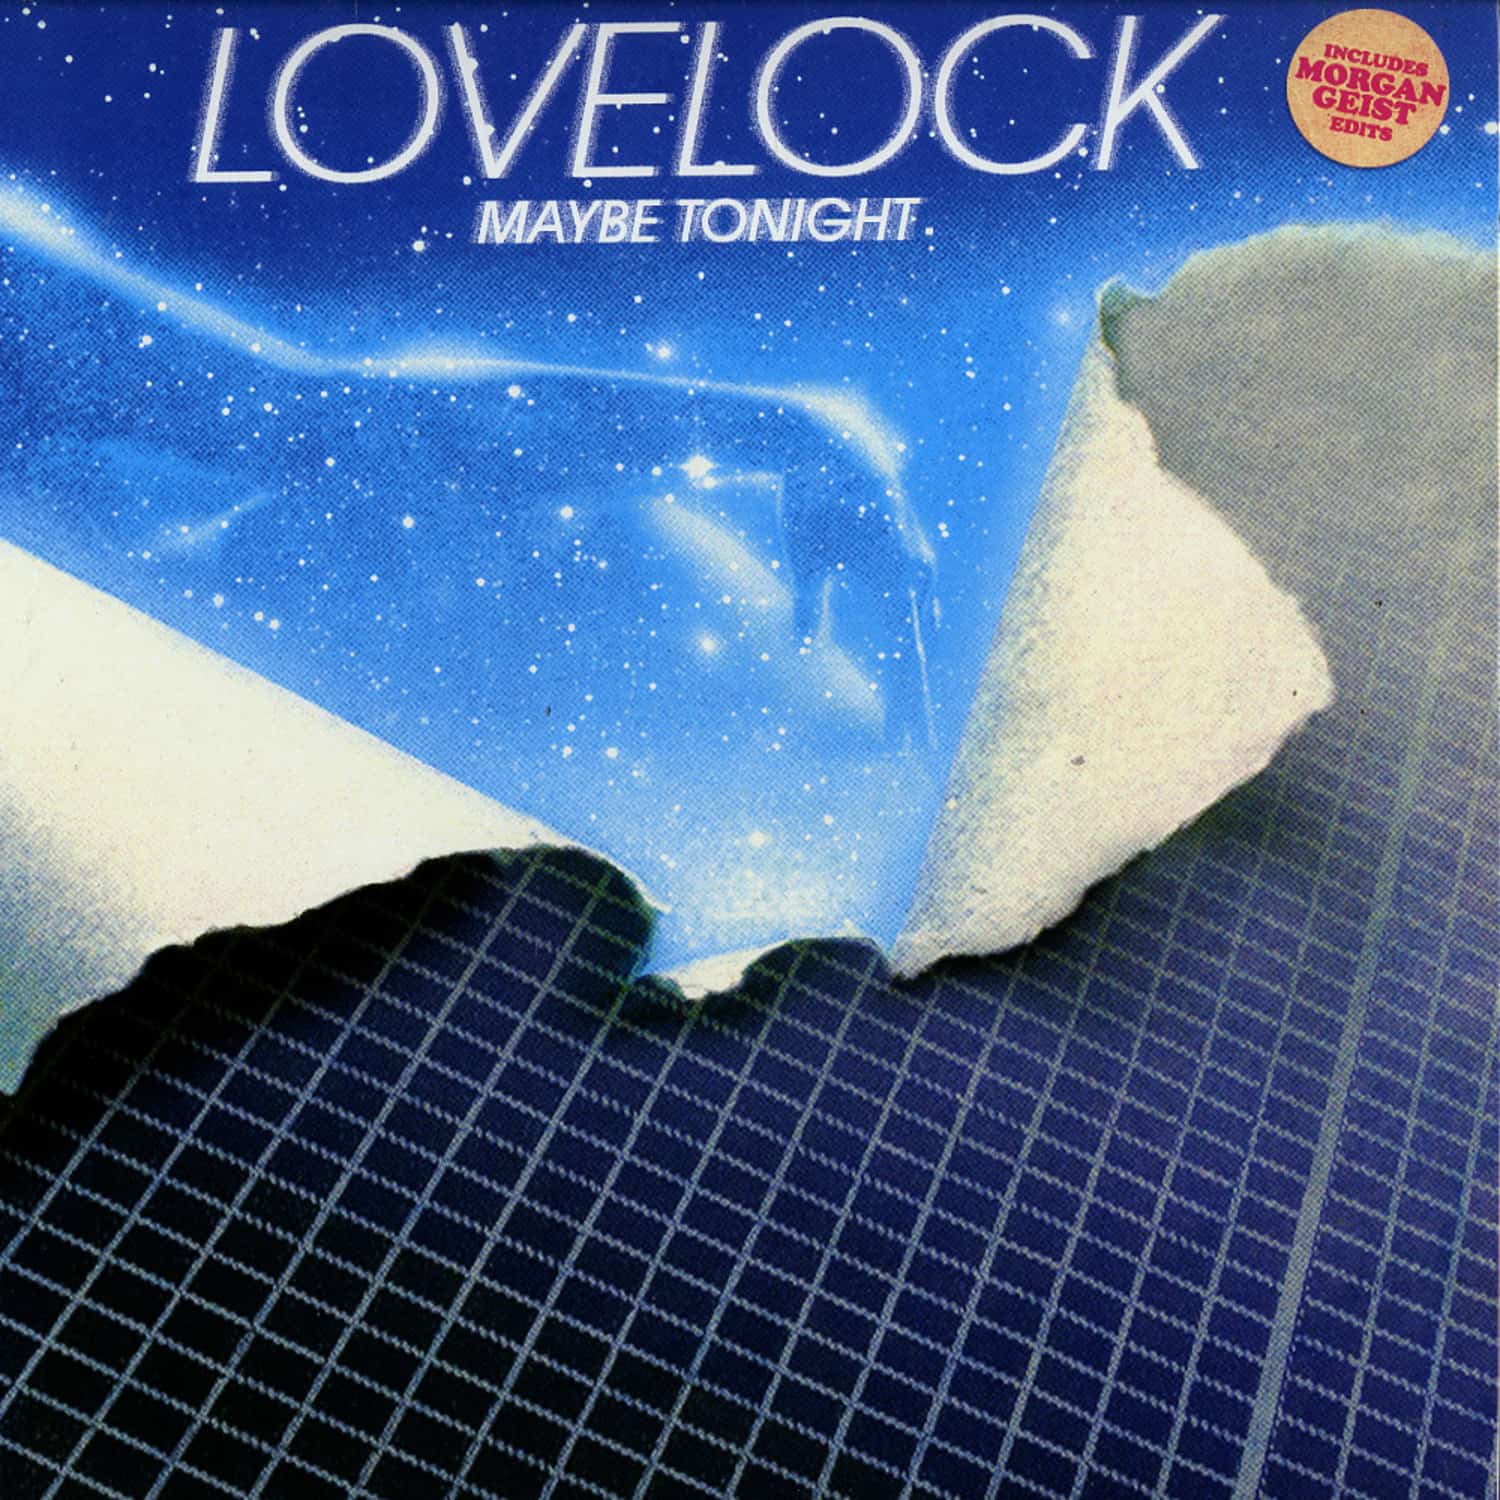 Lovelock - MAYBE TONIGHT - MORGAN GEIST EDITS